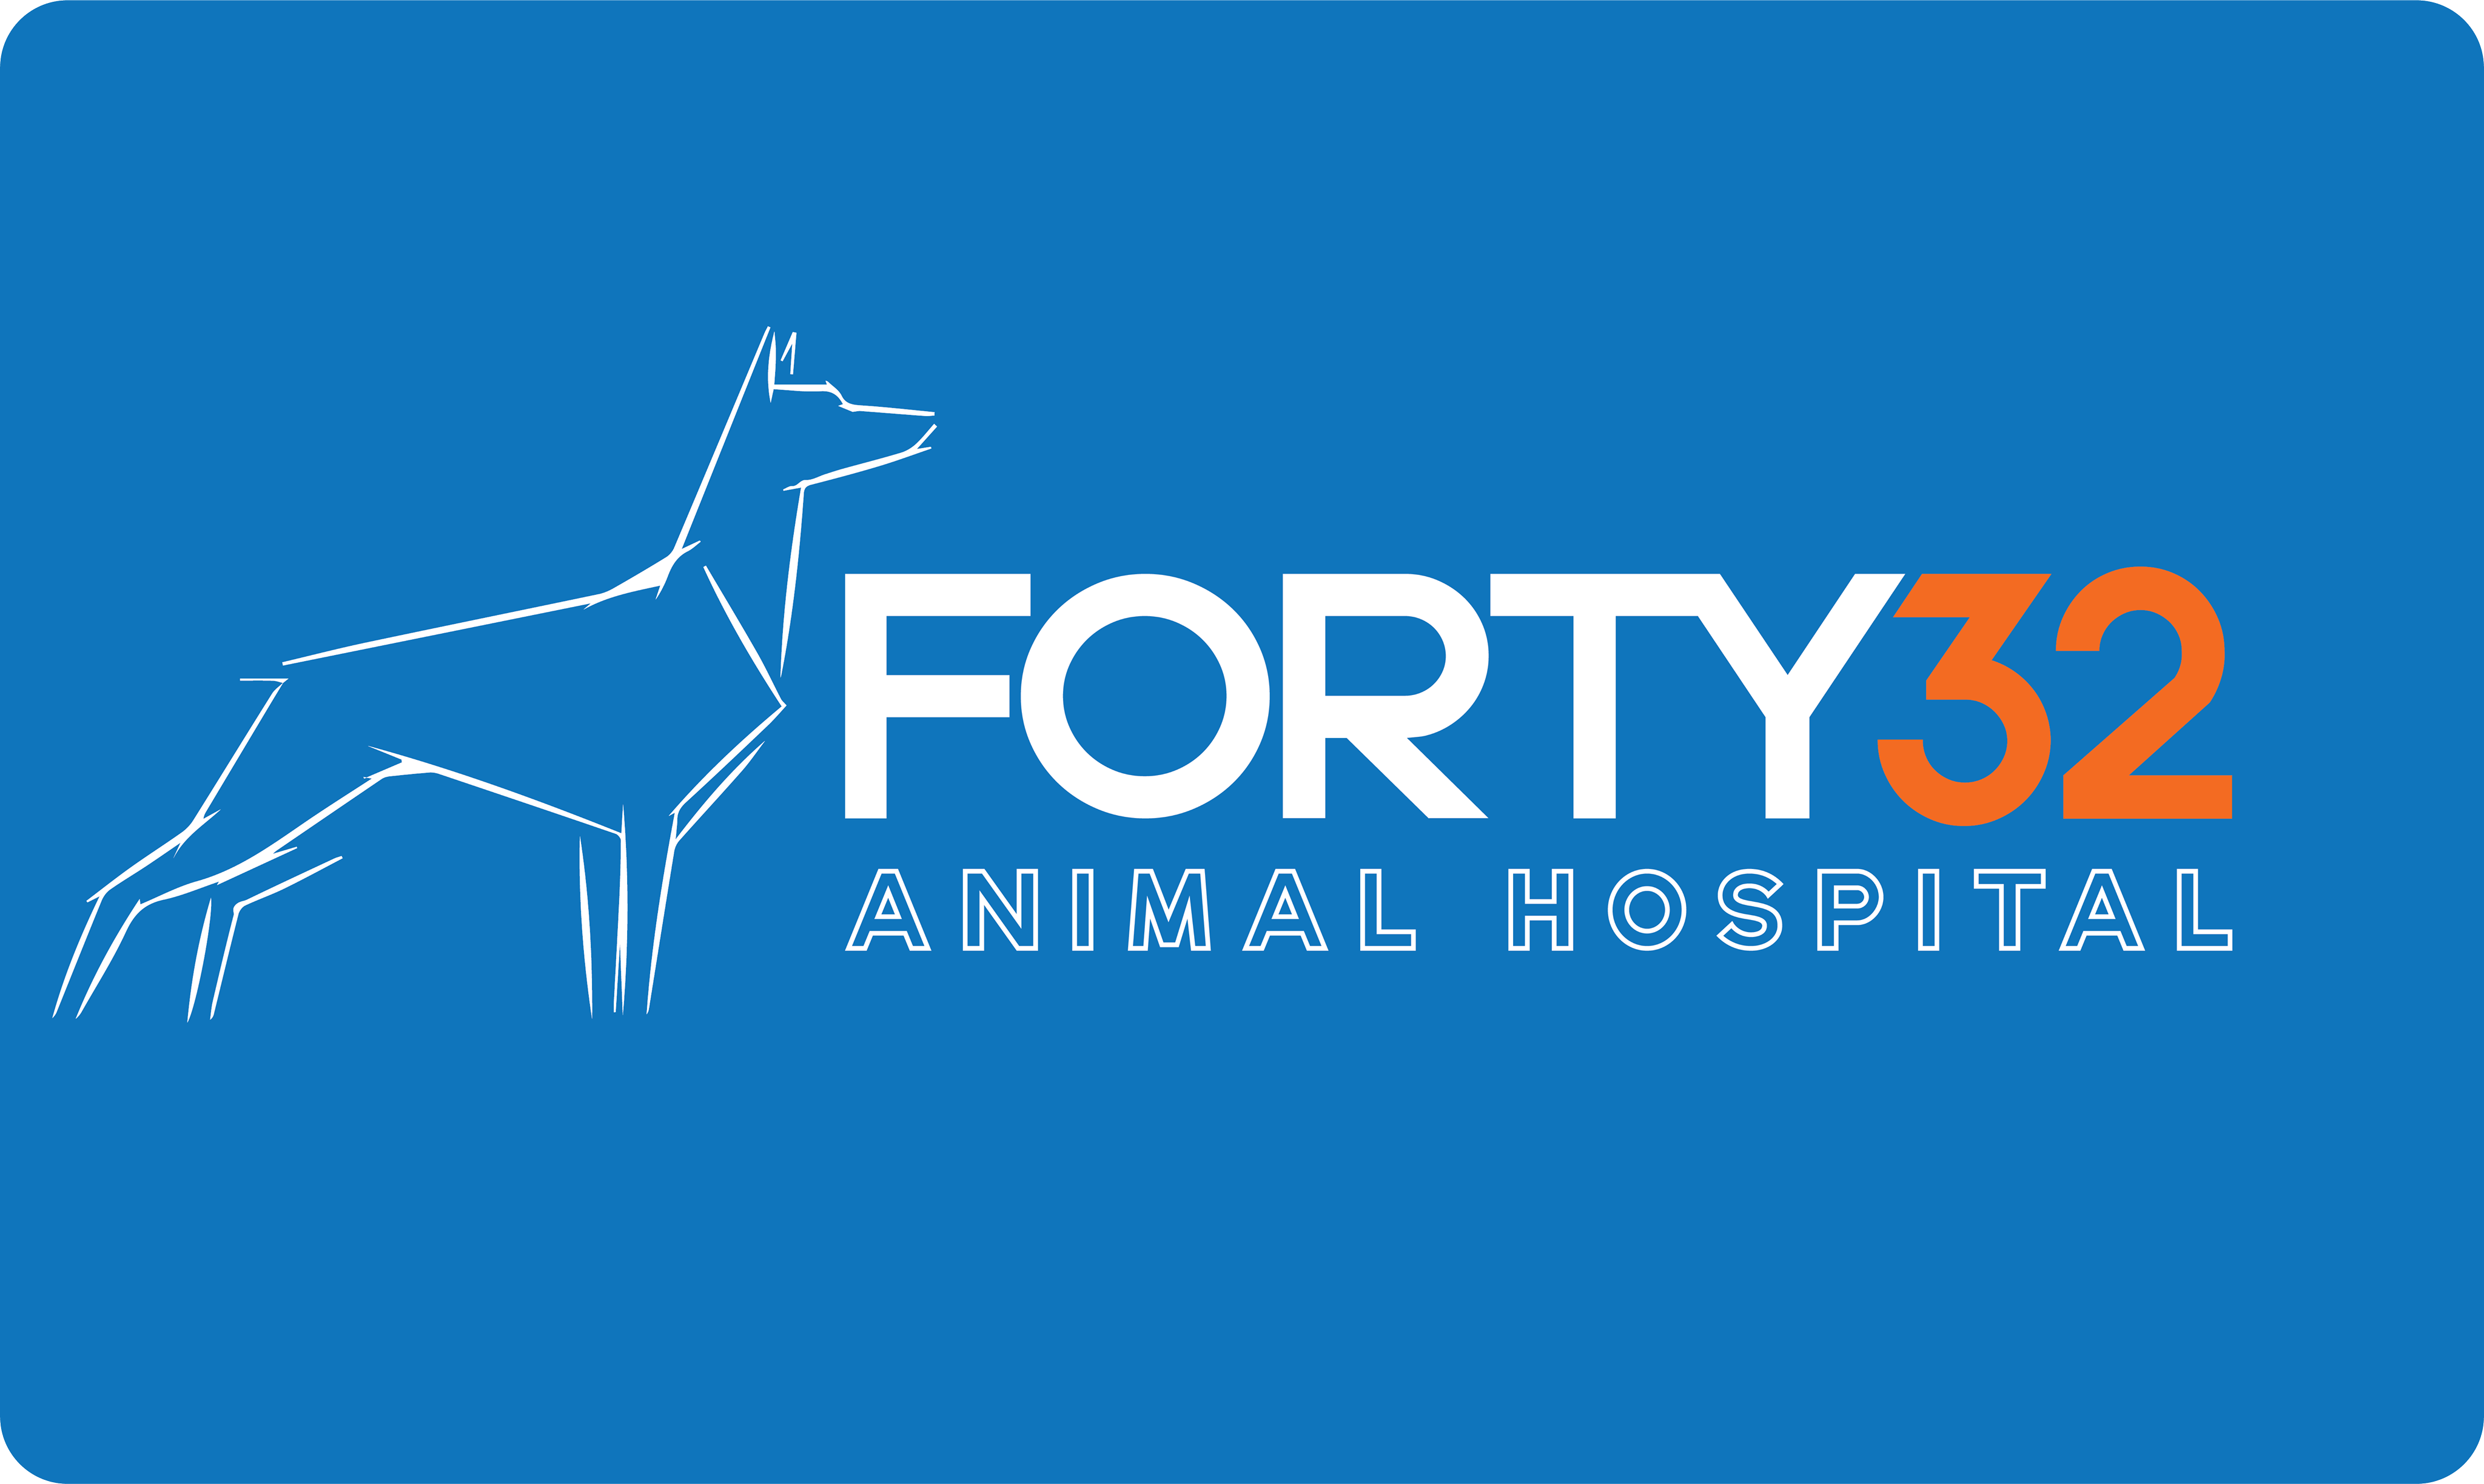 FORTY32 Animal Hospital